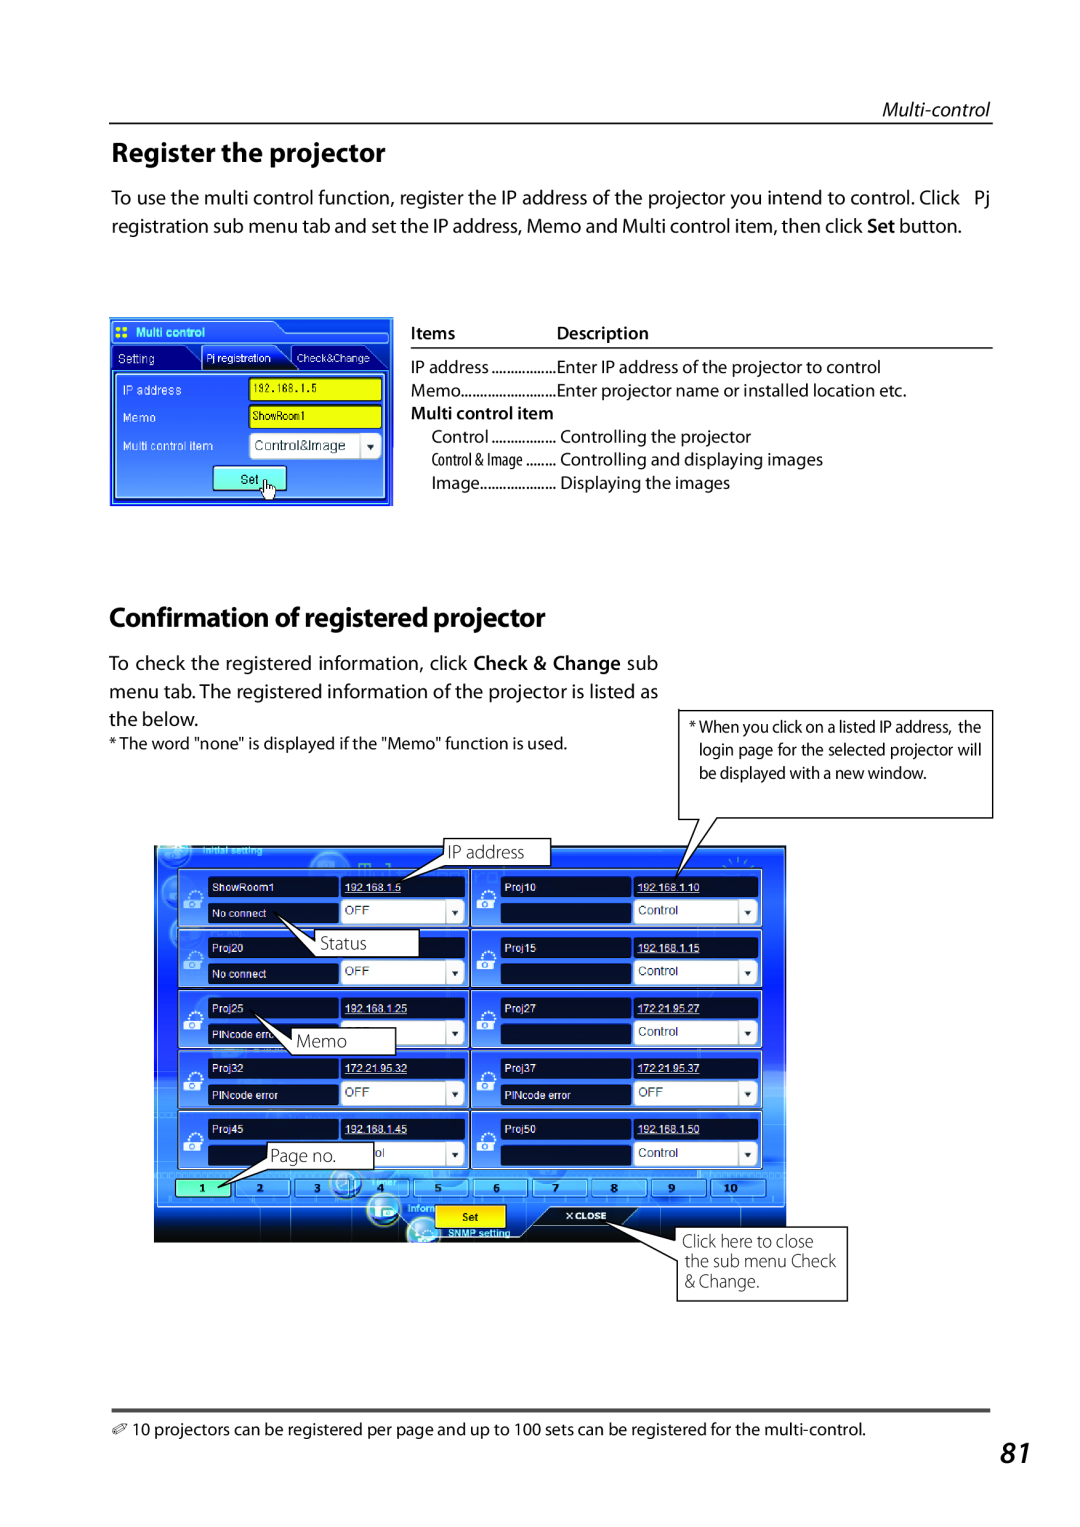 Sanyo PLCXL51 owner manual Register the projector, Confirmation of registered projector, Multi-control, Items, Description 